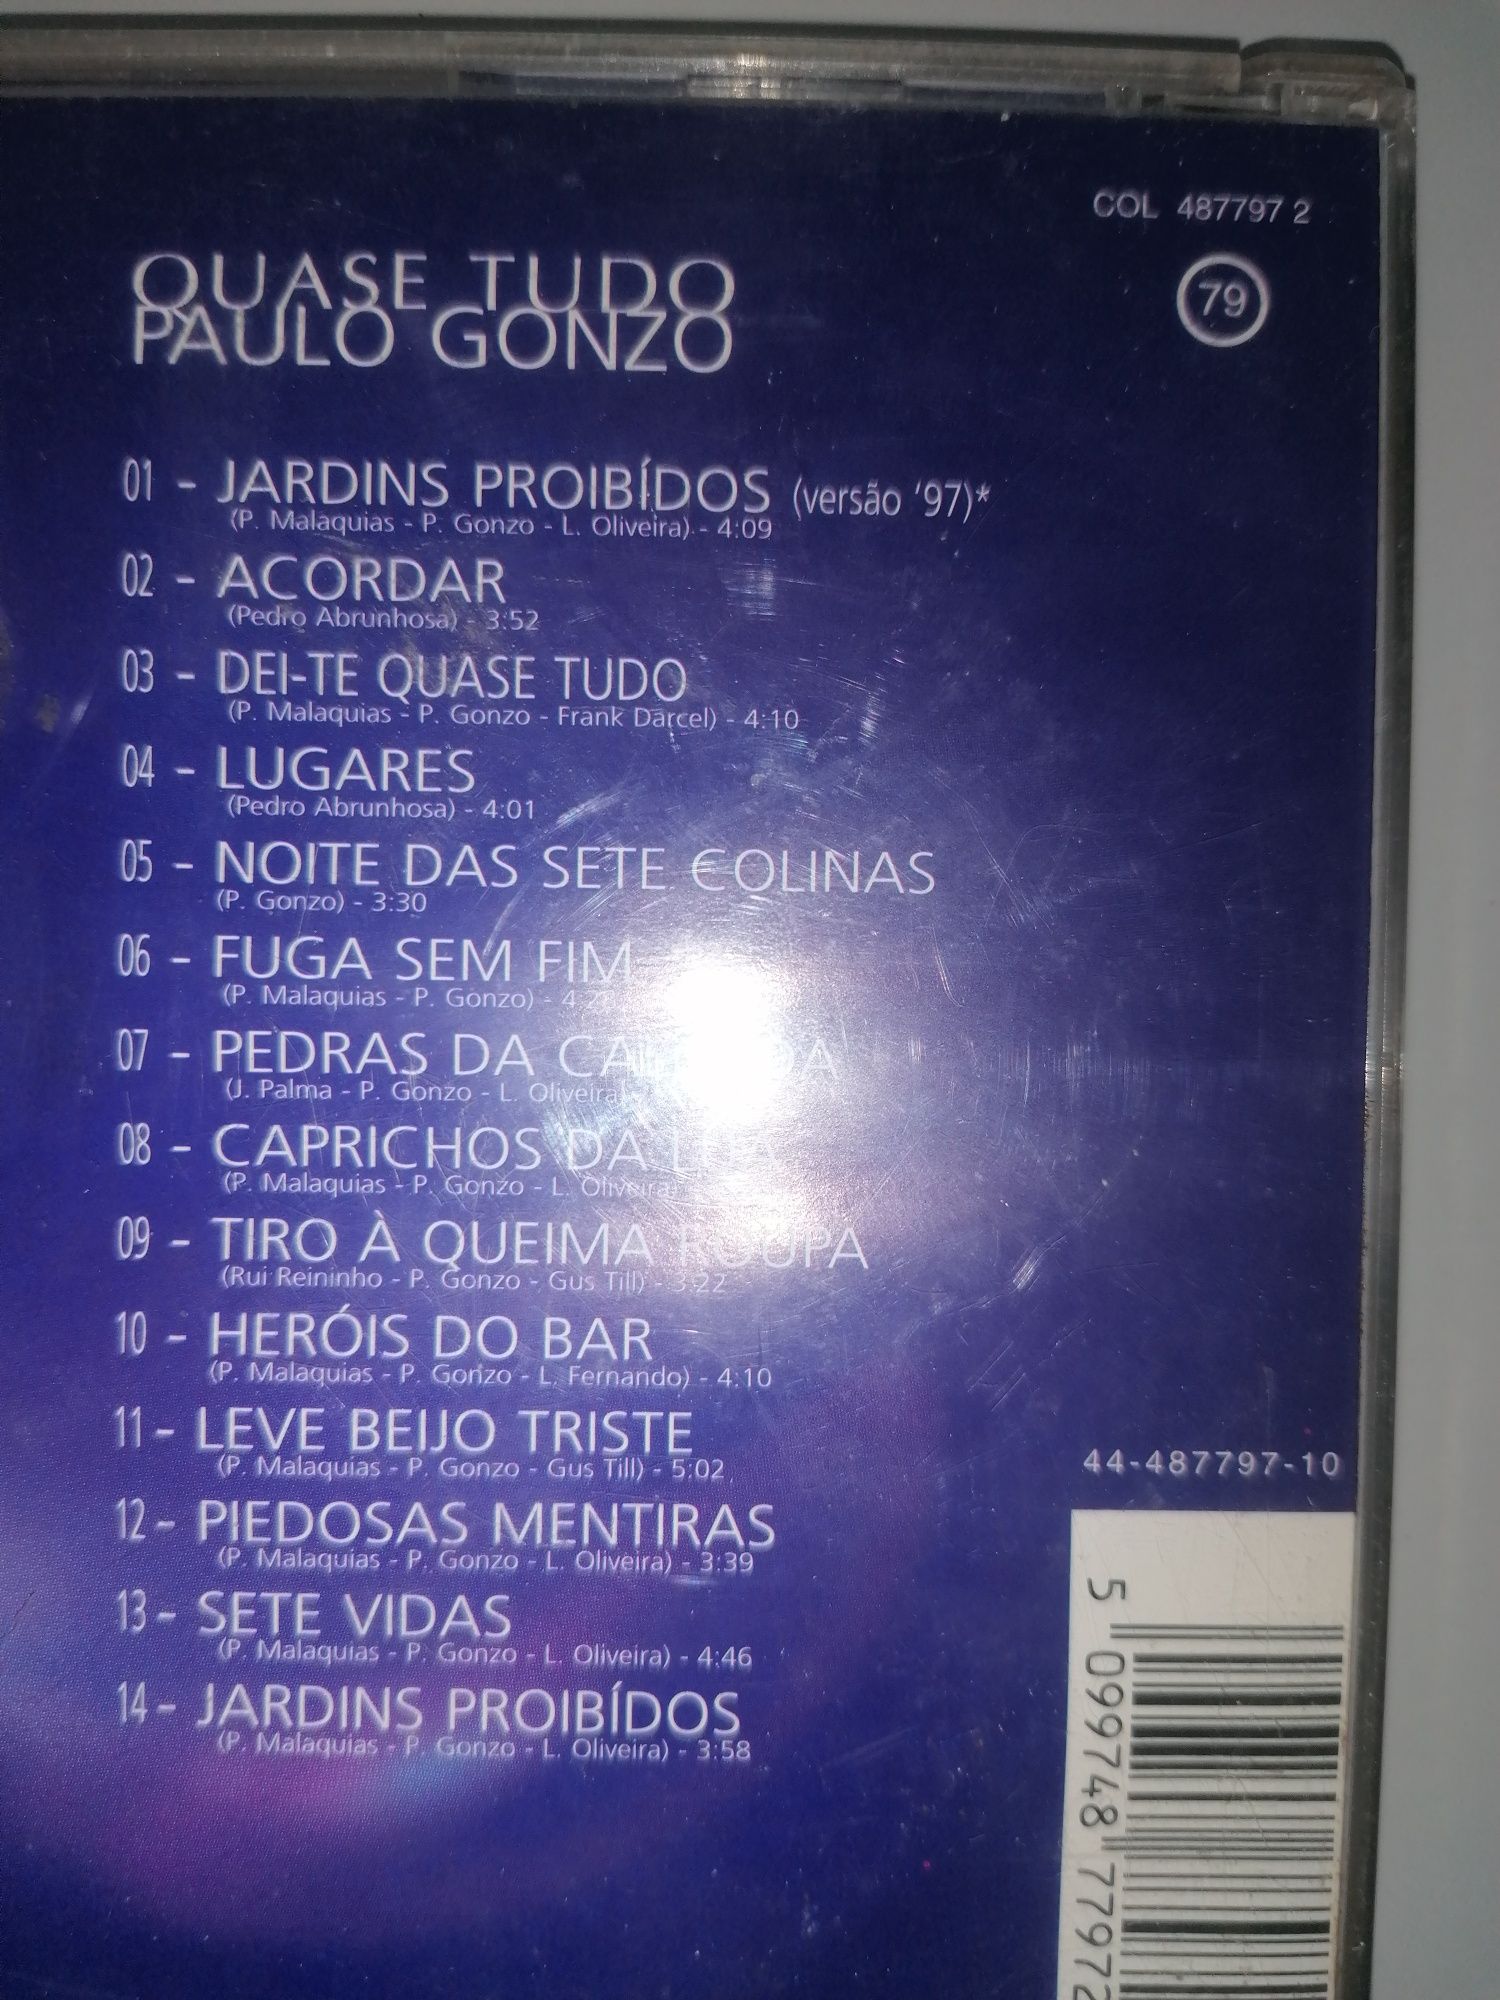 Paulo gonzo CD música